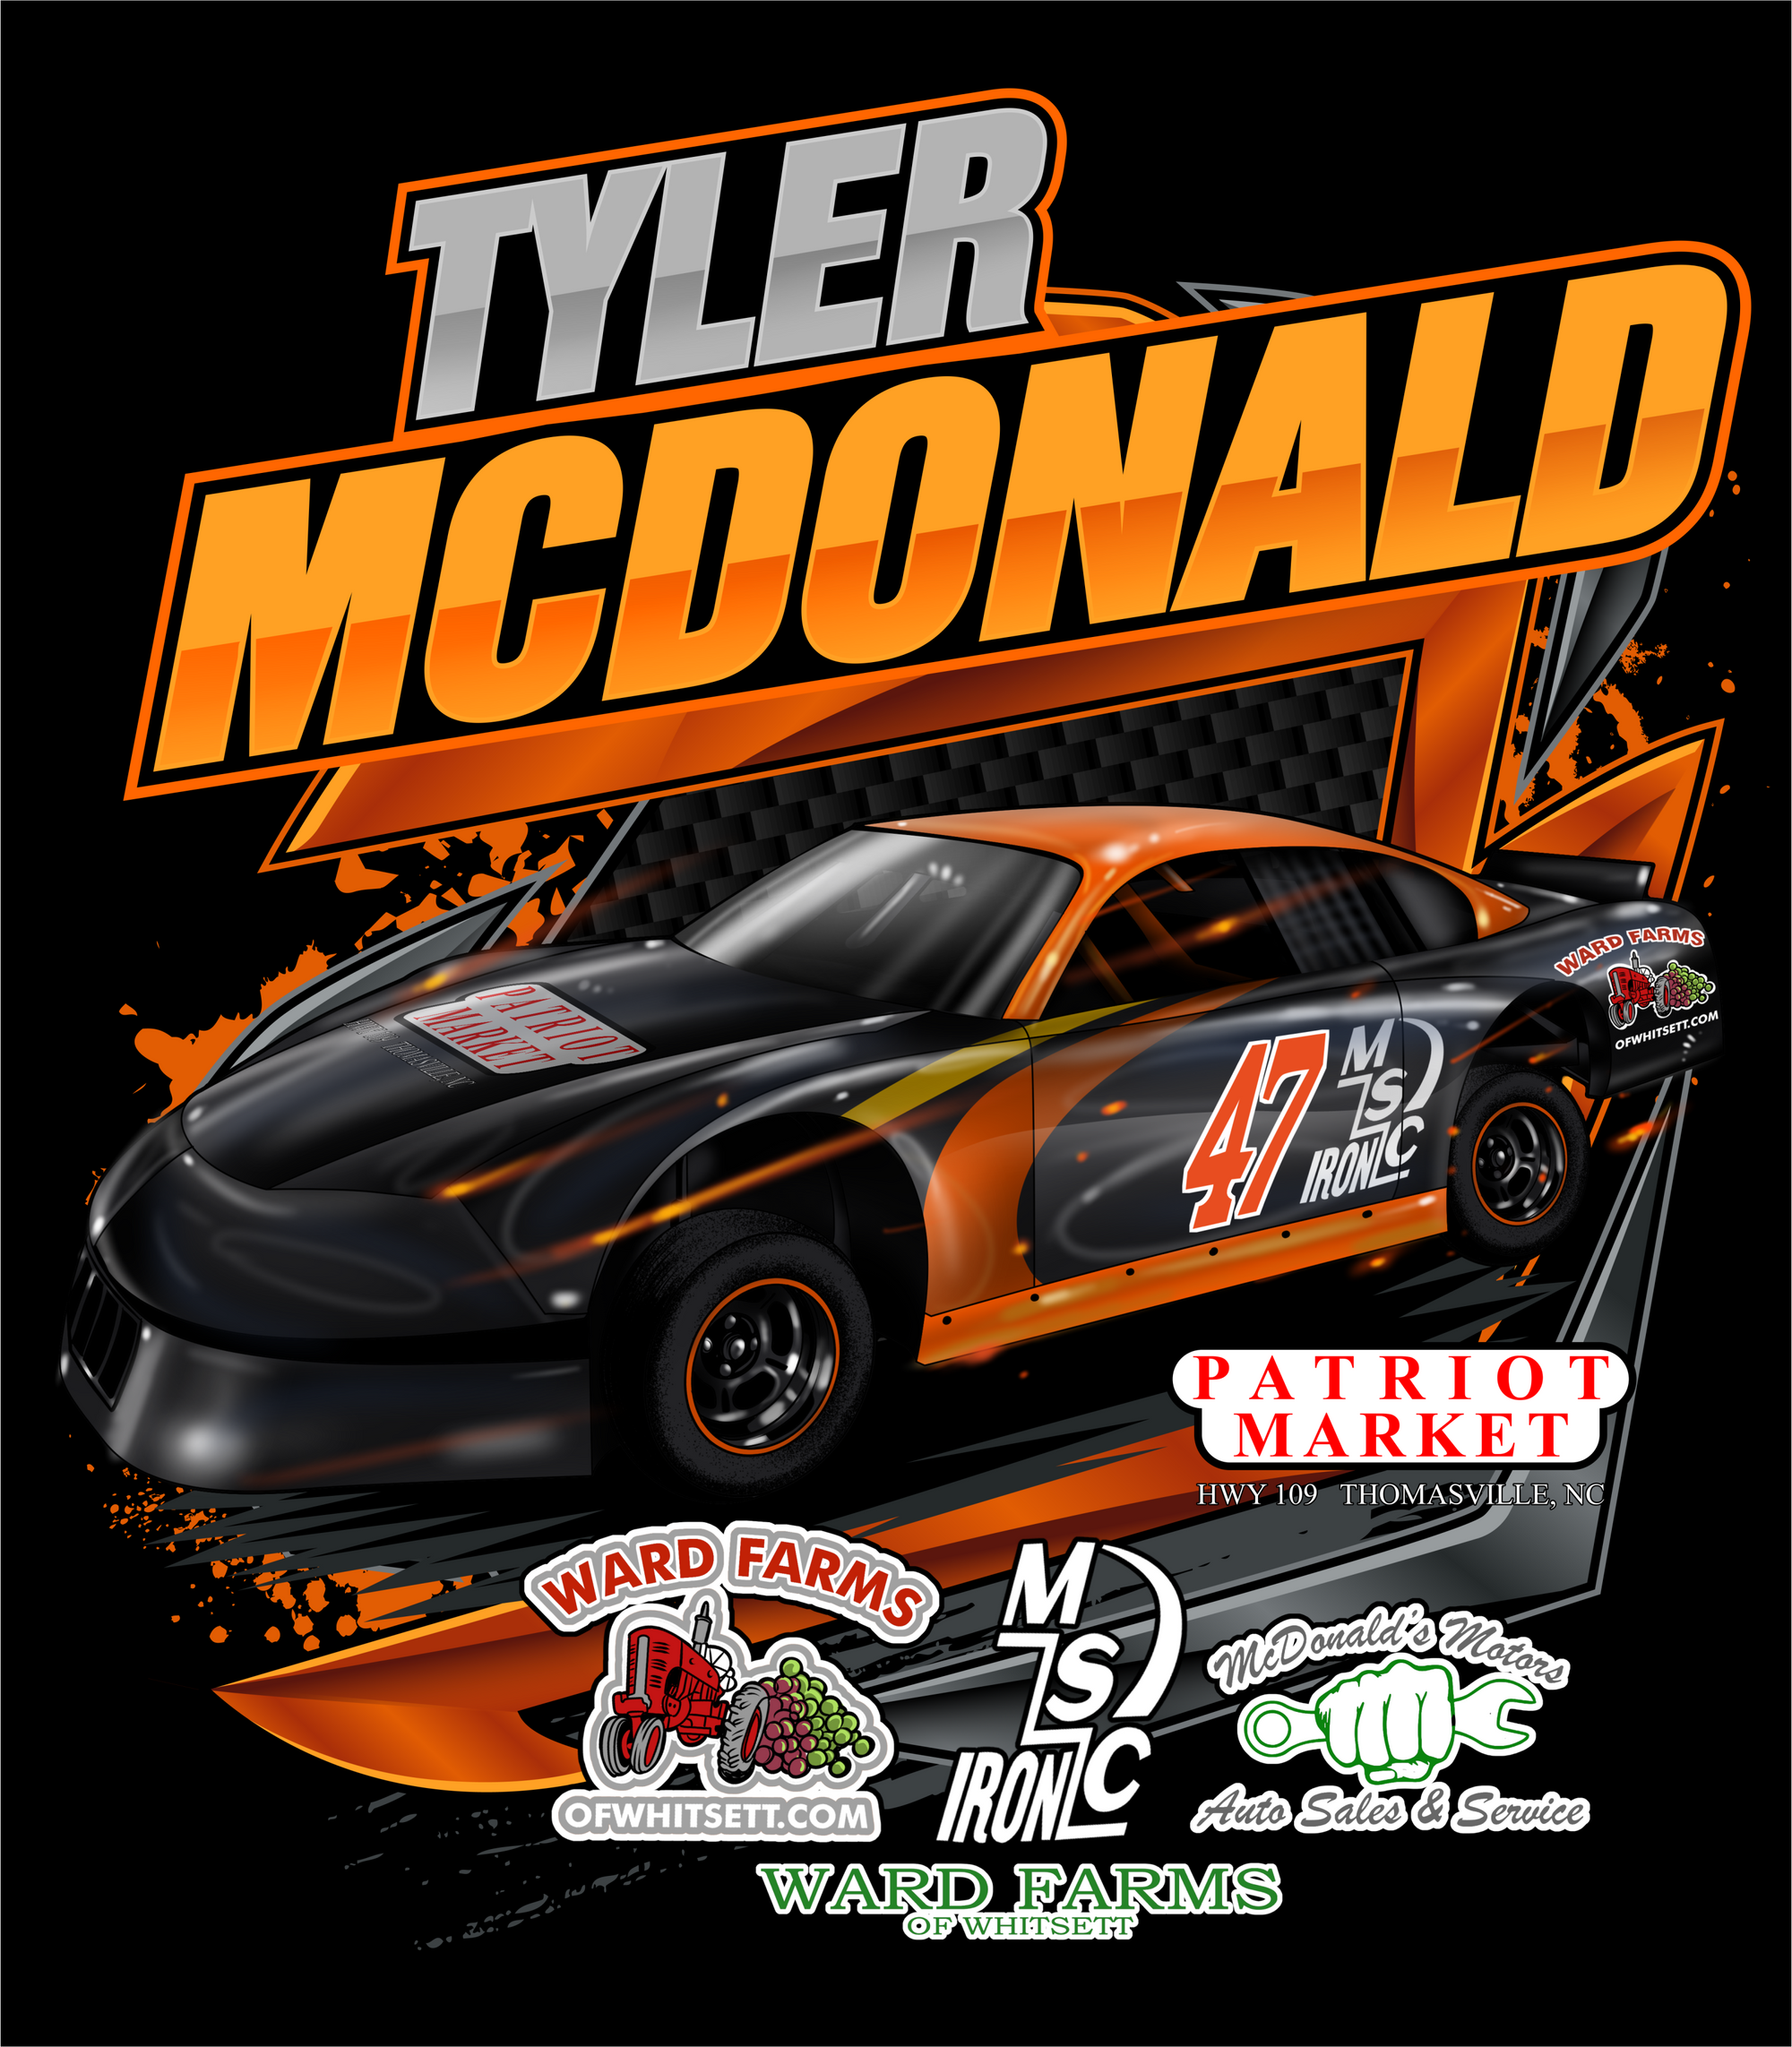 Tyler McDonald